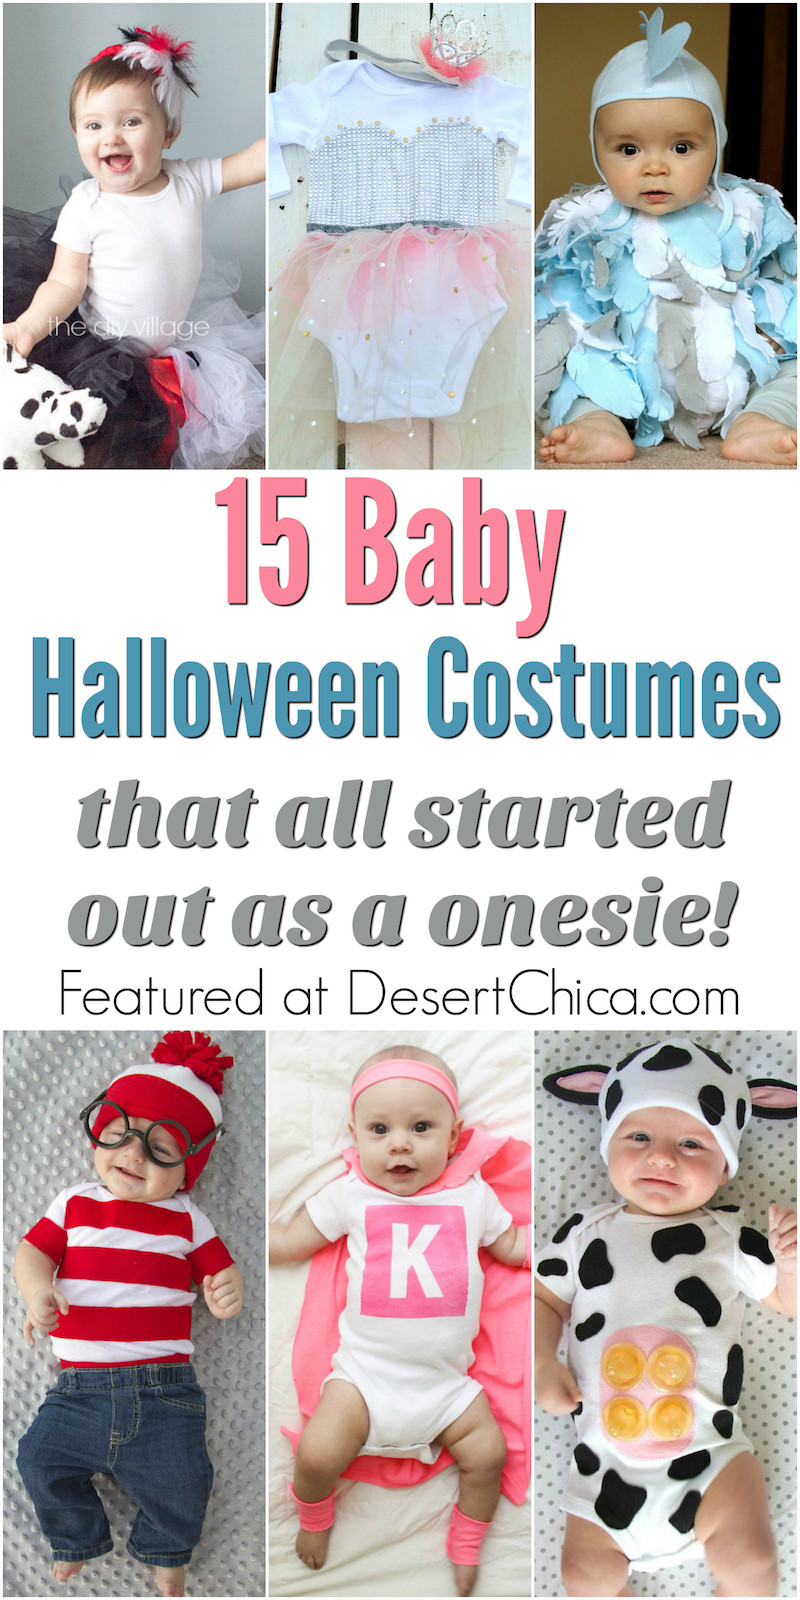 DIY Halloween Costumes For Babies
 15 esie Costumes for Babies